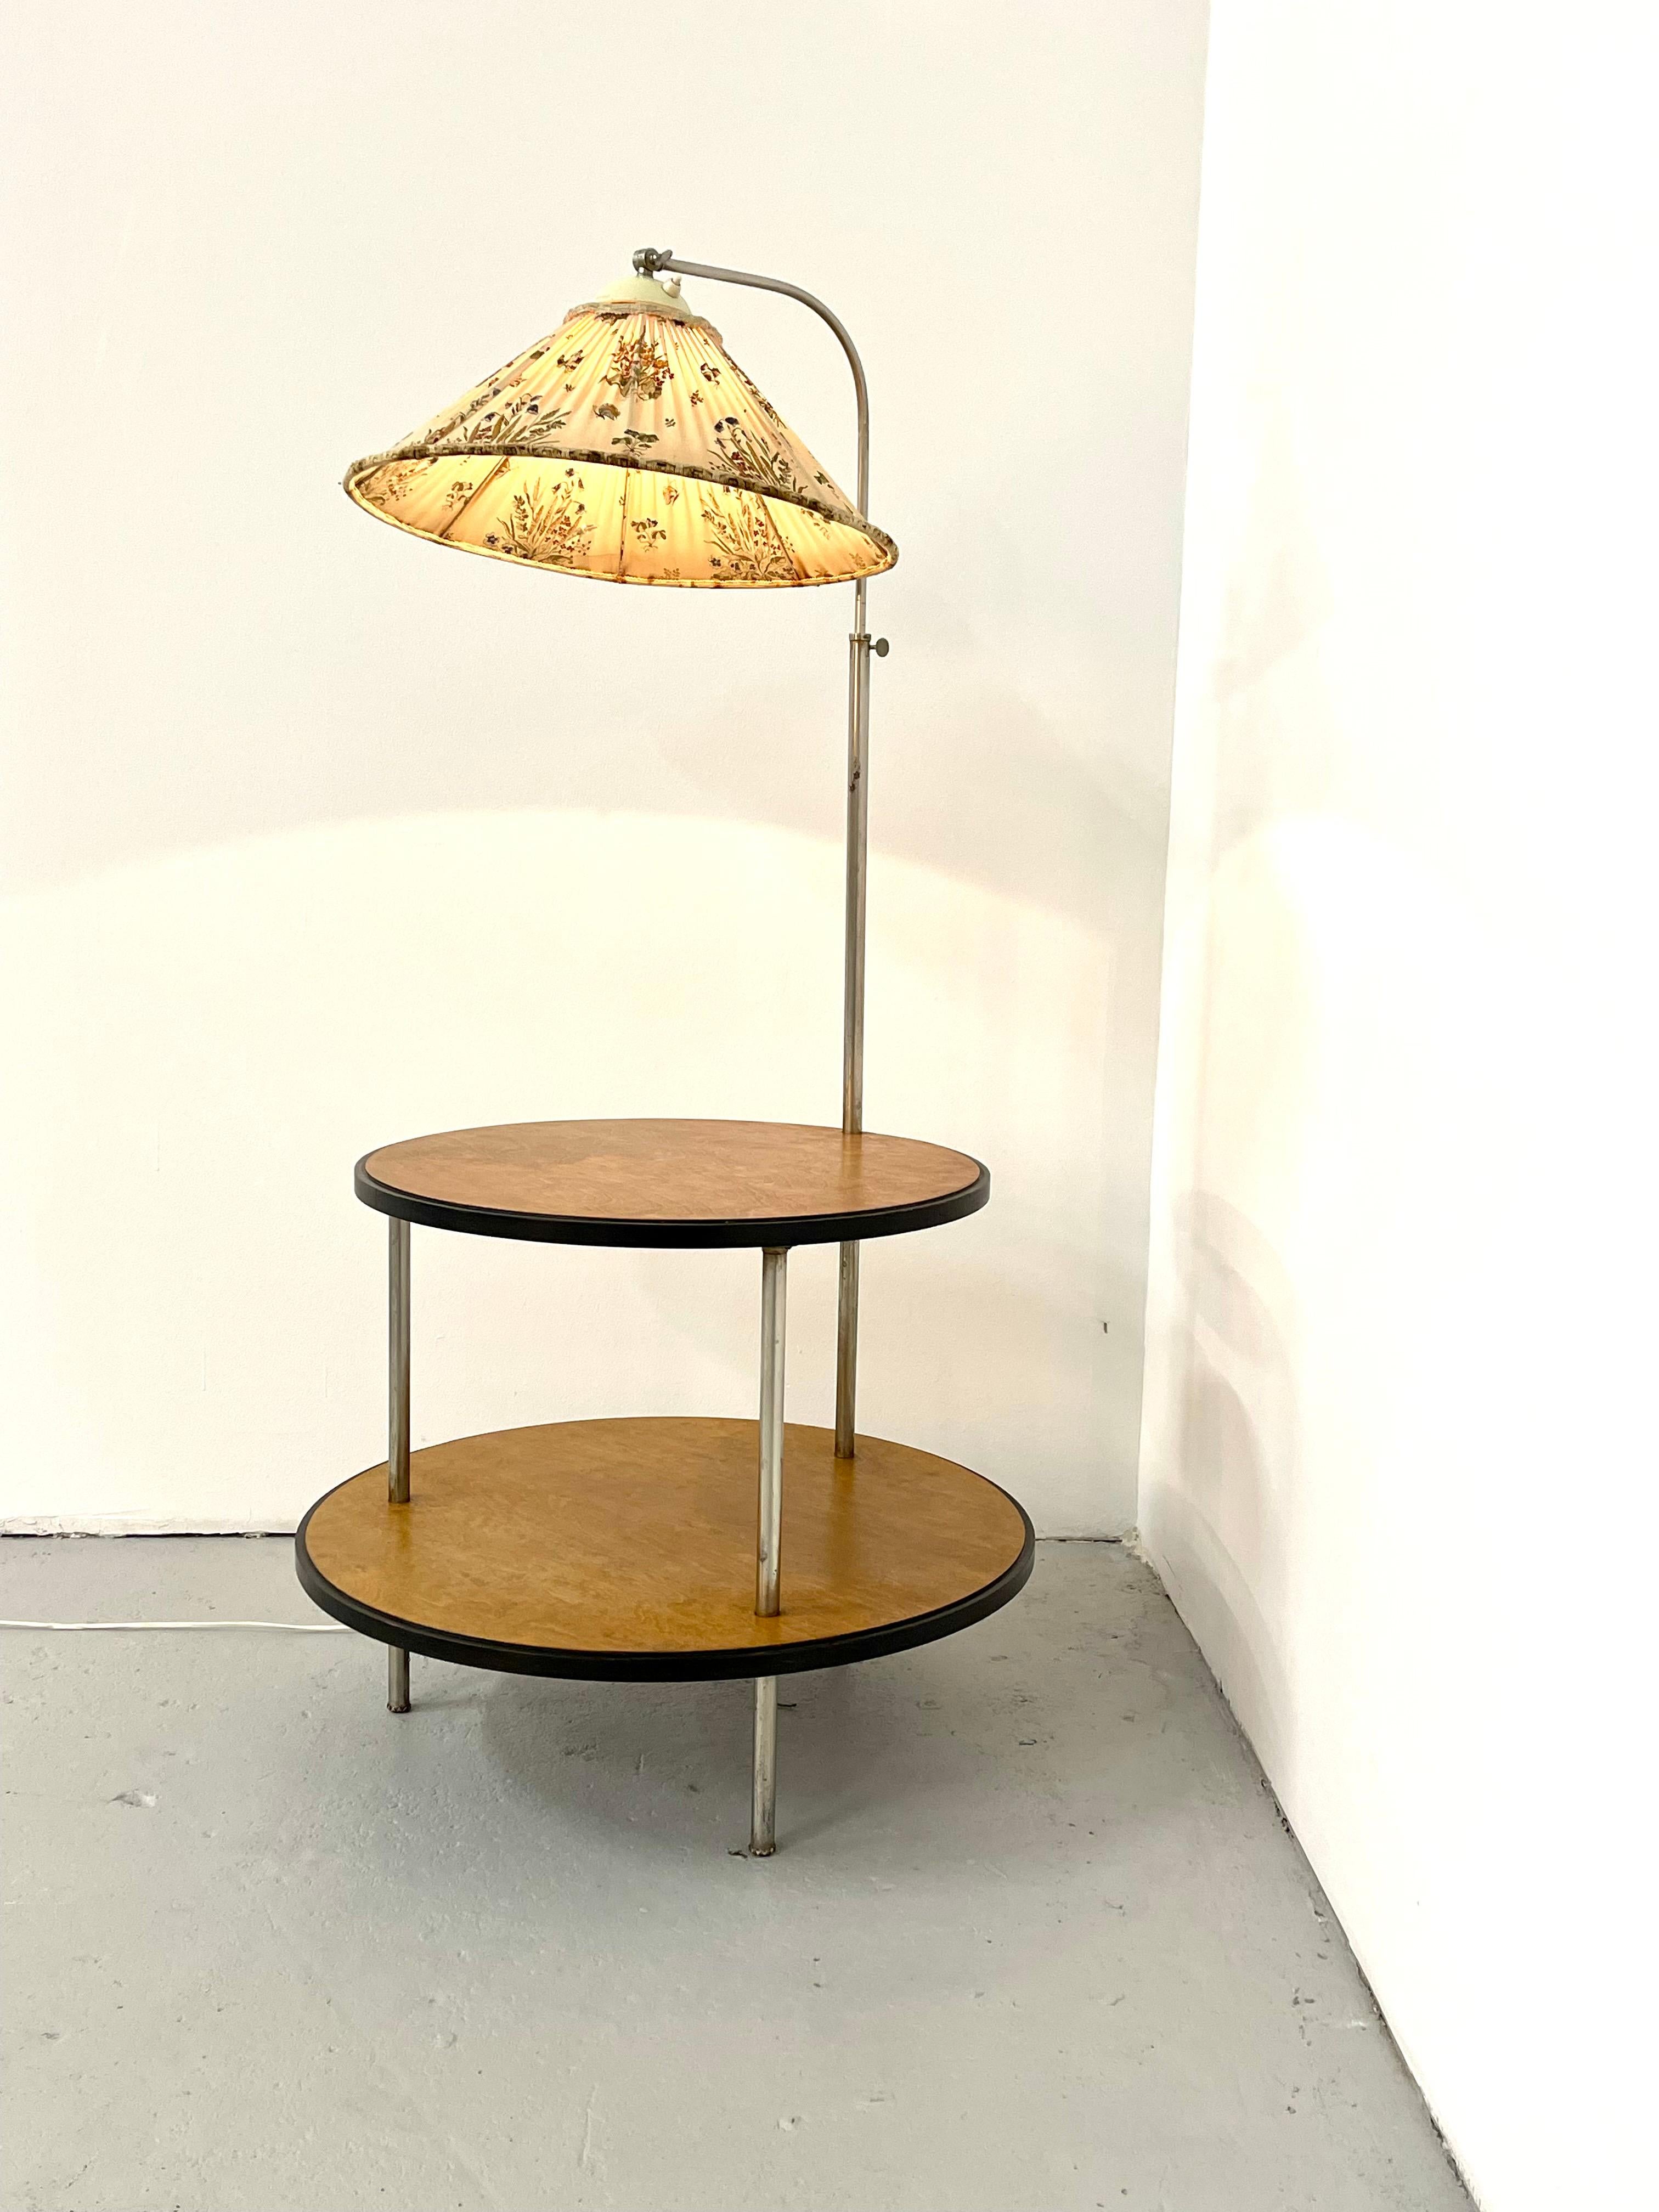 Art Deco Axel Einar Hjorth, Birch & Steel Lamp-Table by NK, Stockholm 1934